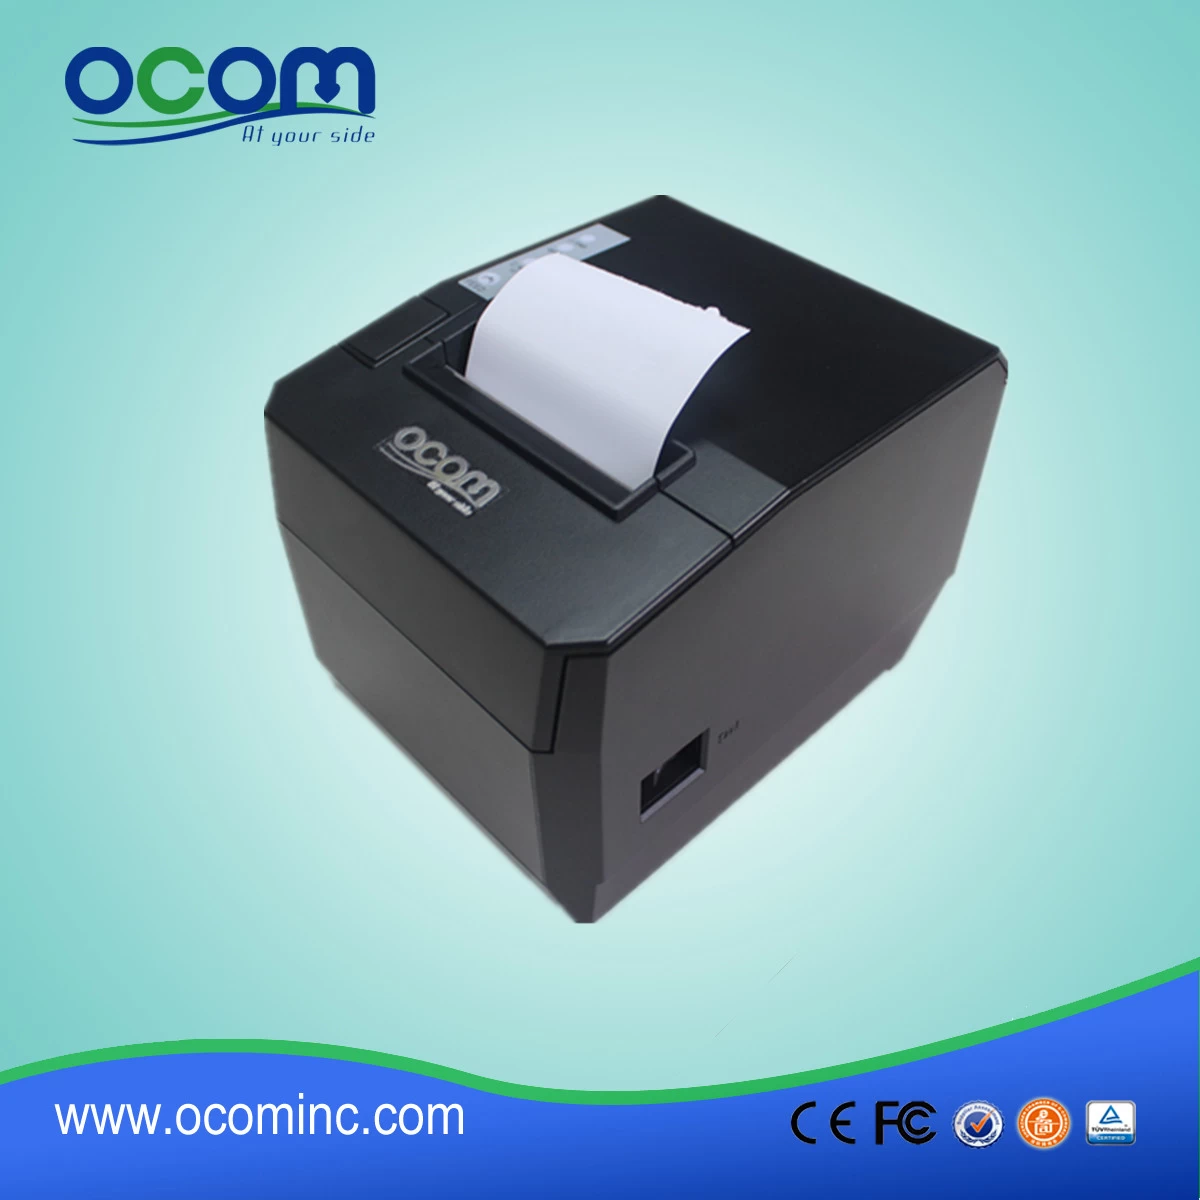 80mm Bluetooth Thermal Printer  OCPP-88A